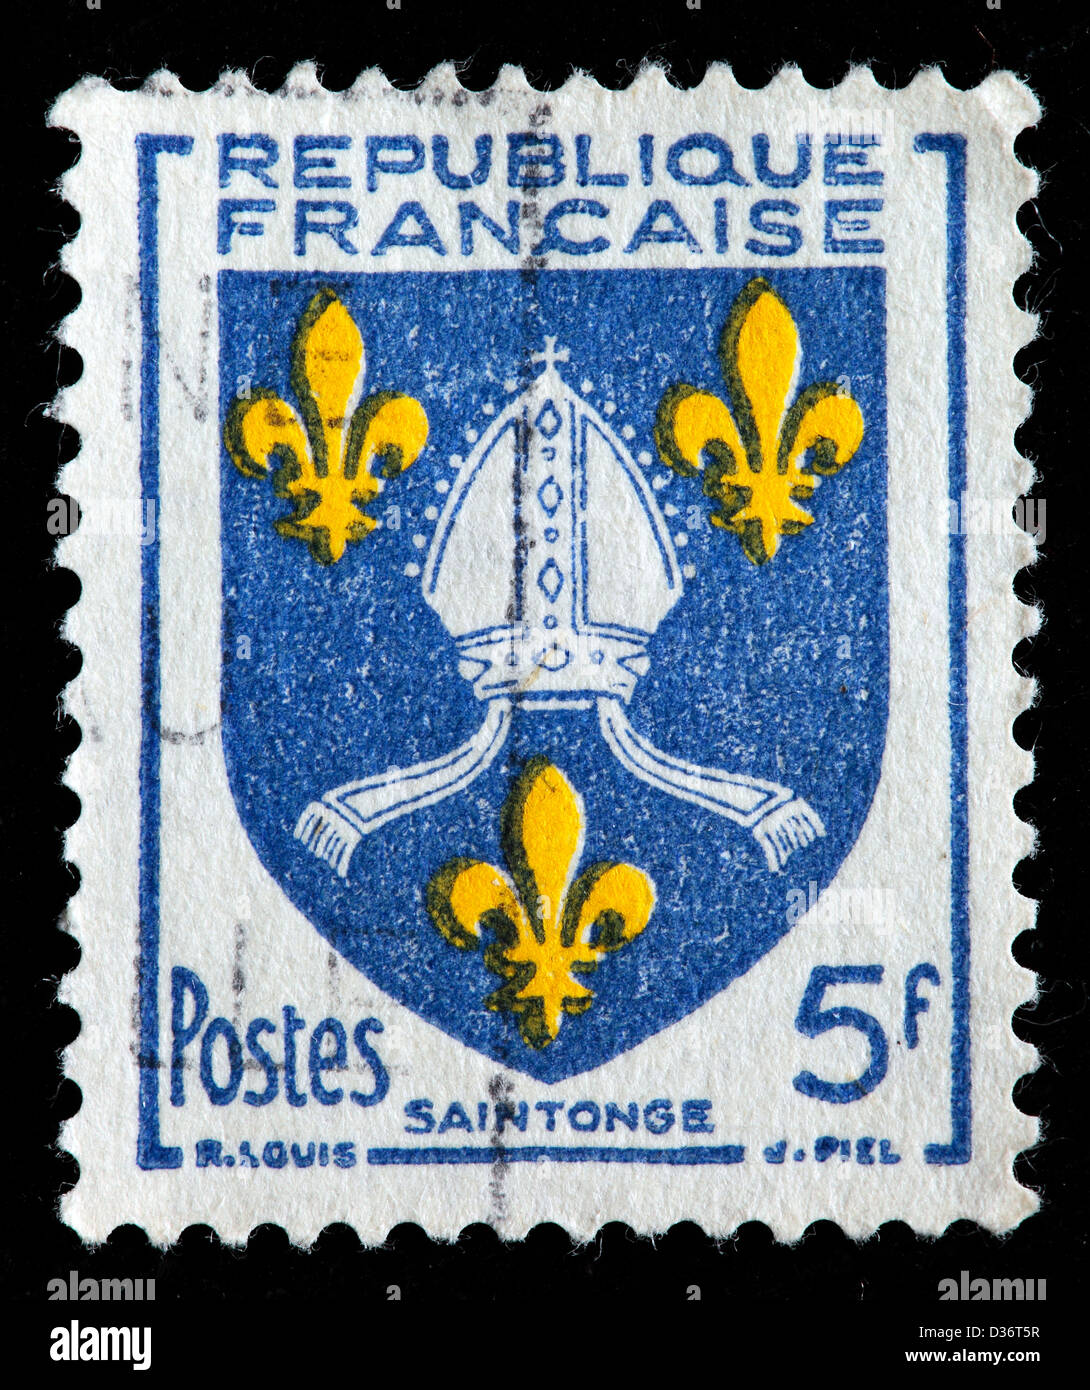 Arms of Saintonge, postage stamp, France, 1958 Stock Photo